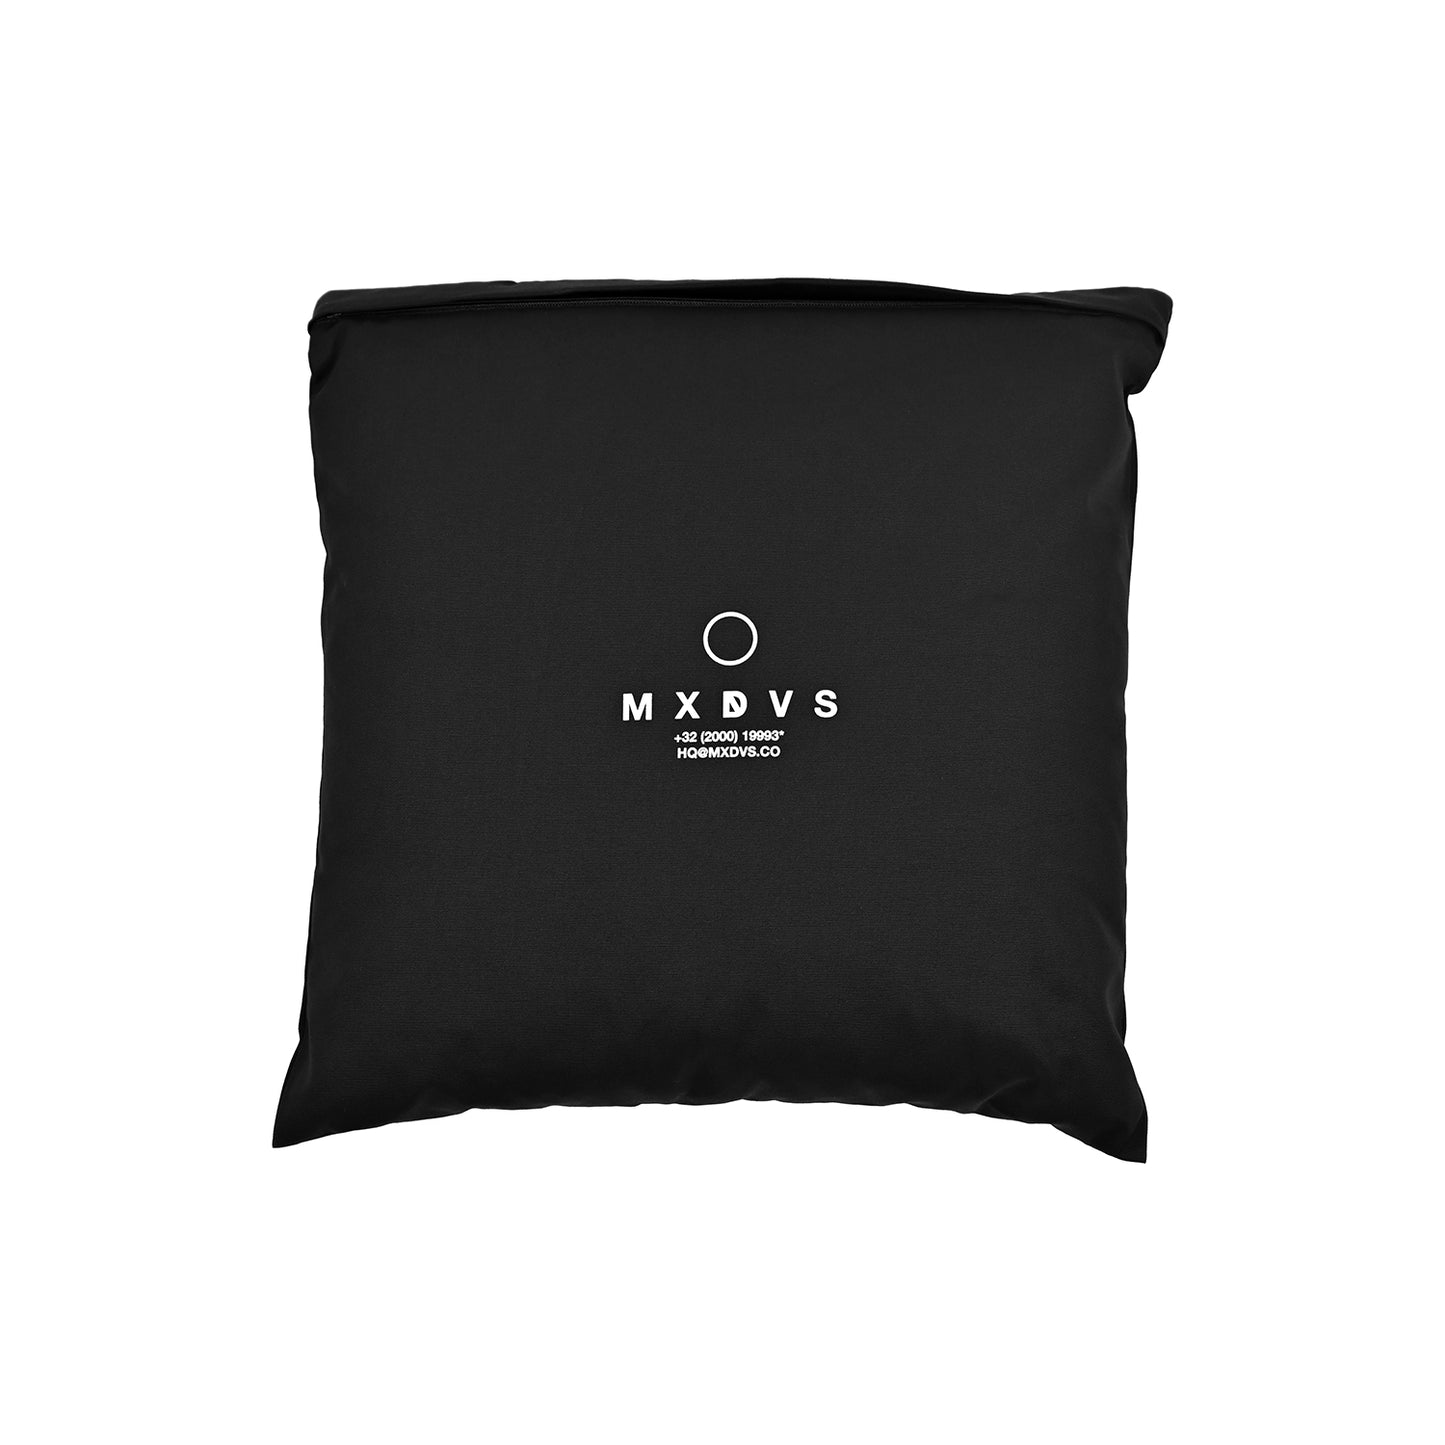 Bedlam Axis Pillow